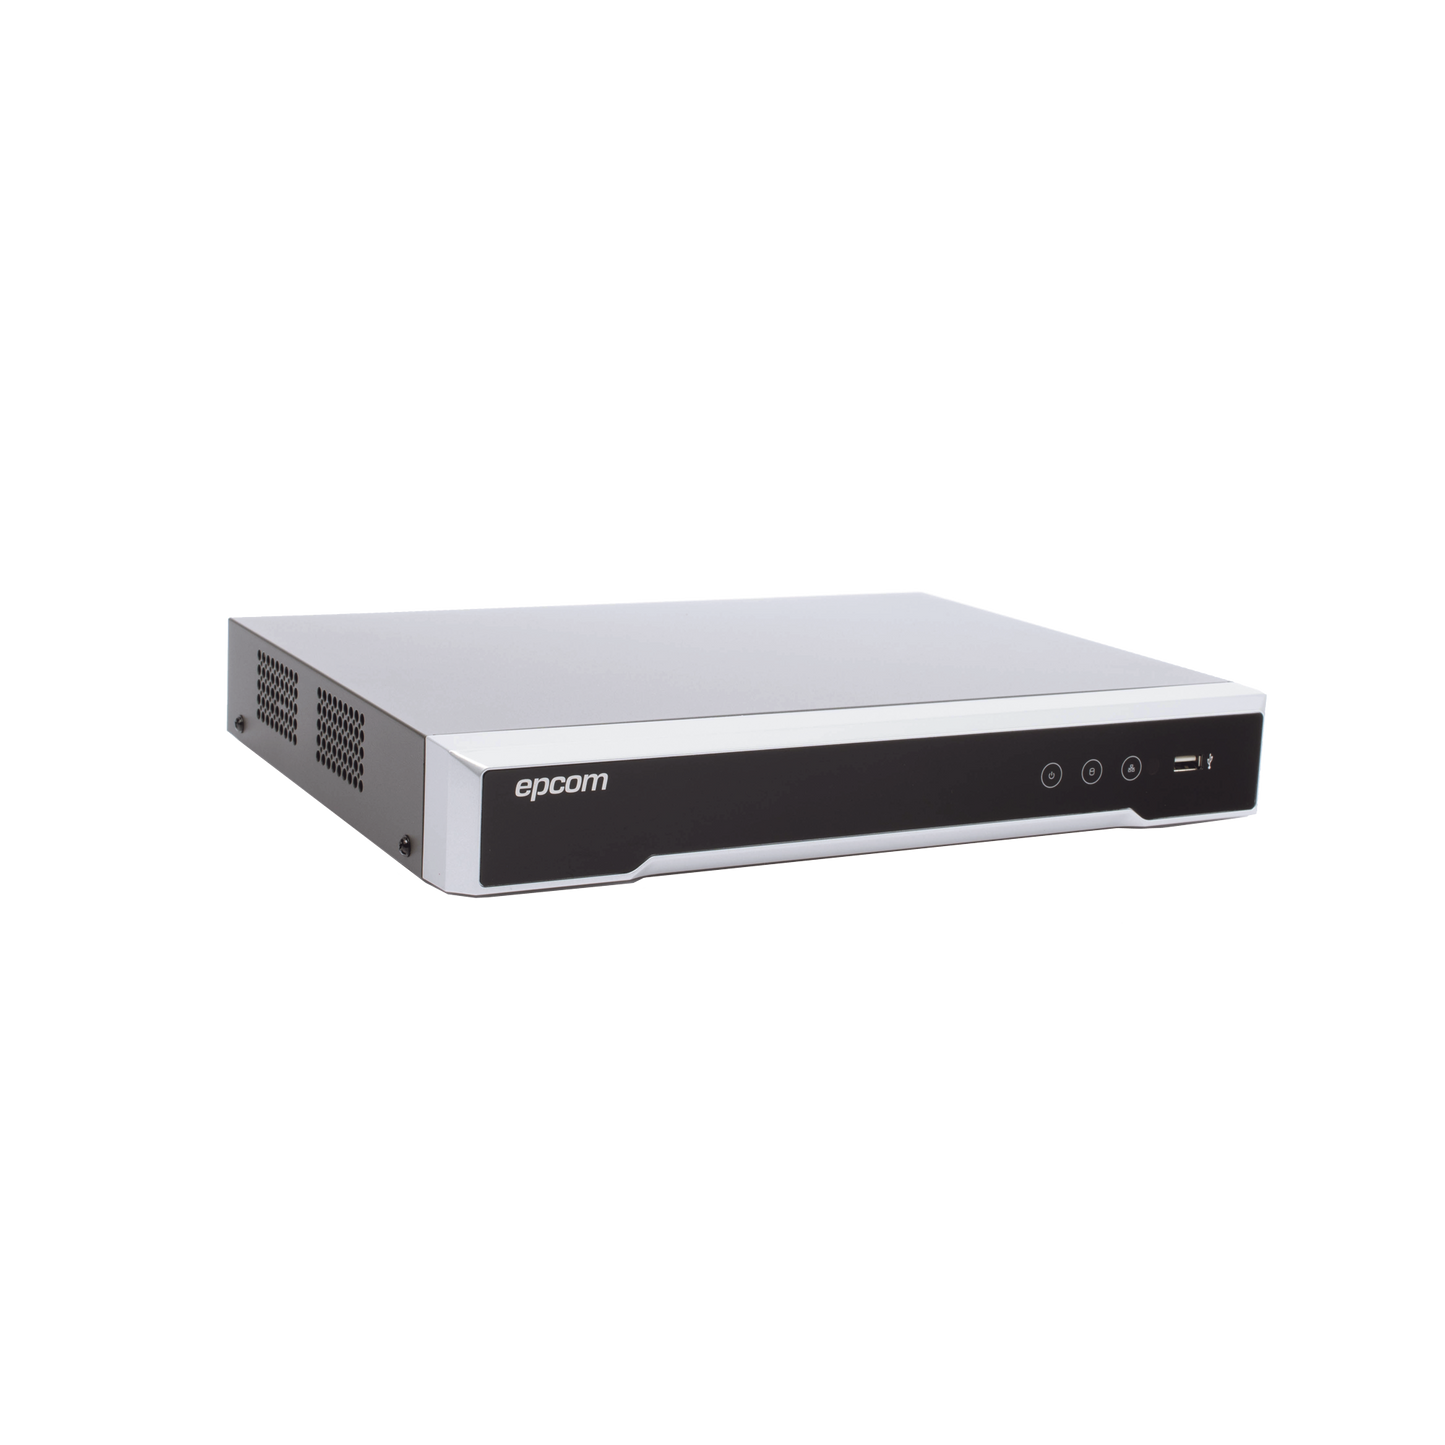 DVR 8 Megapixel / 8 Channels 4K TURBOHD + 8 IP Channels / 1 HDD Bays / 4 Audio Channels / Coaxitron Audio / 8 Alarm Inputs / Videoanalysis